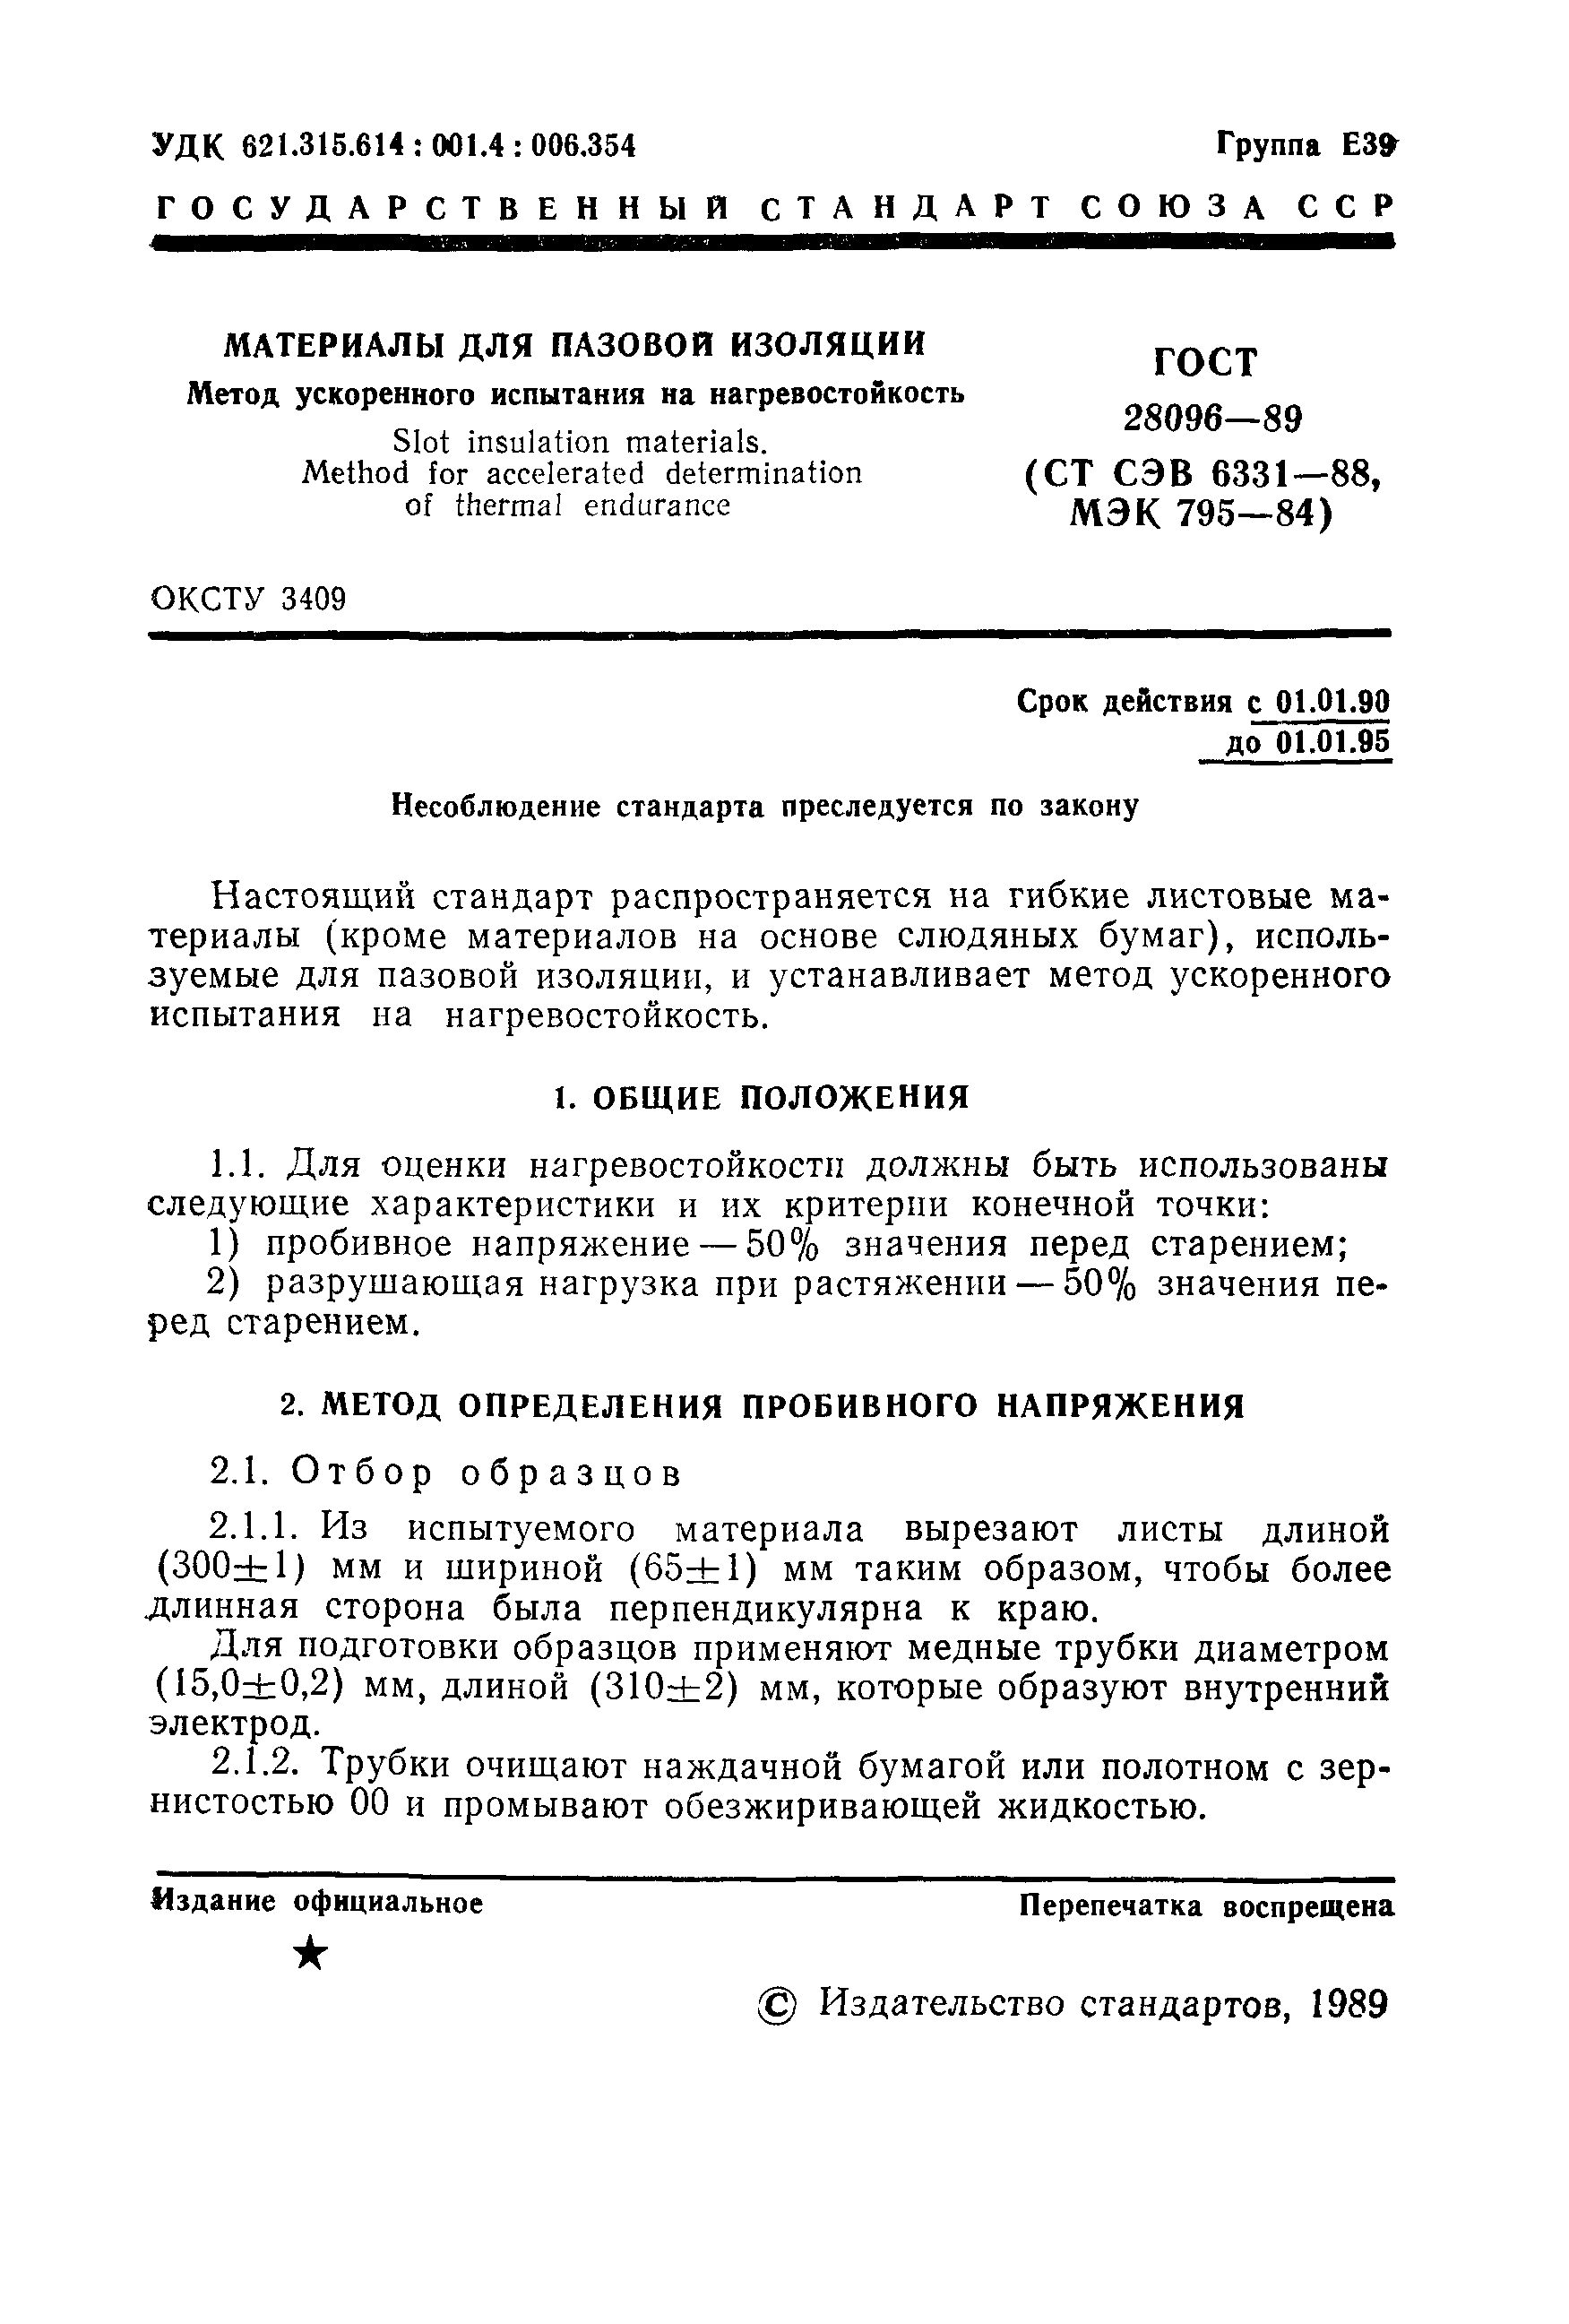 ГОСТ 28096-89